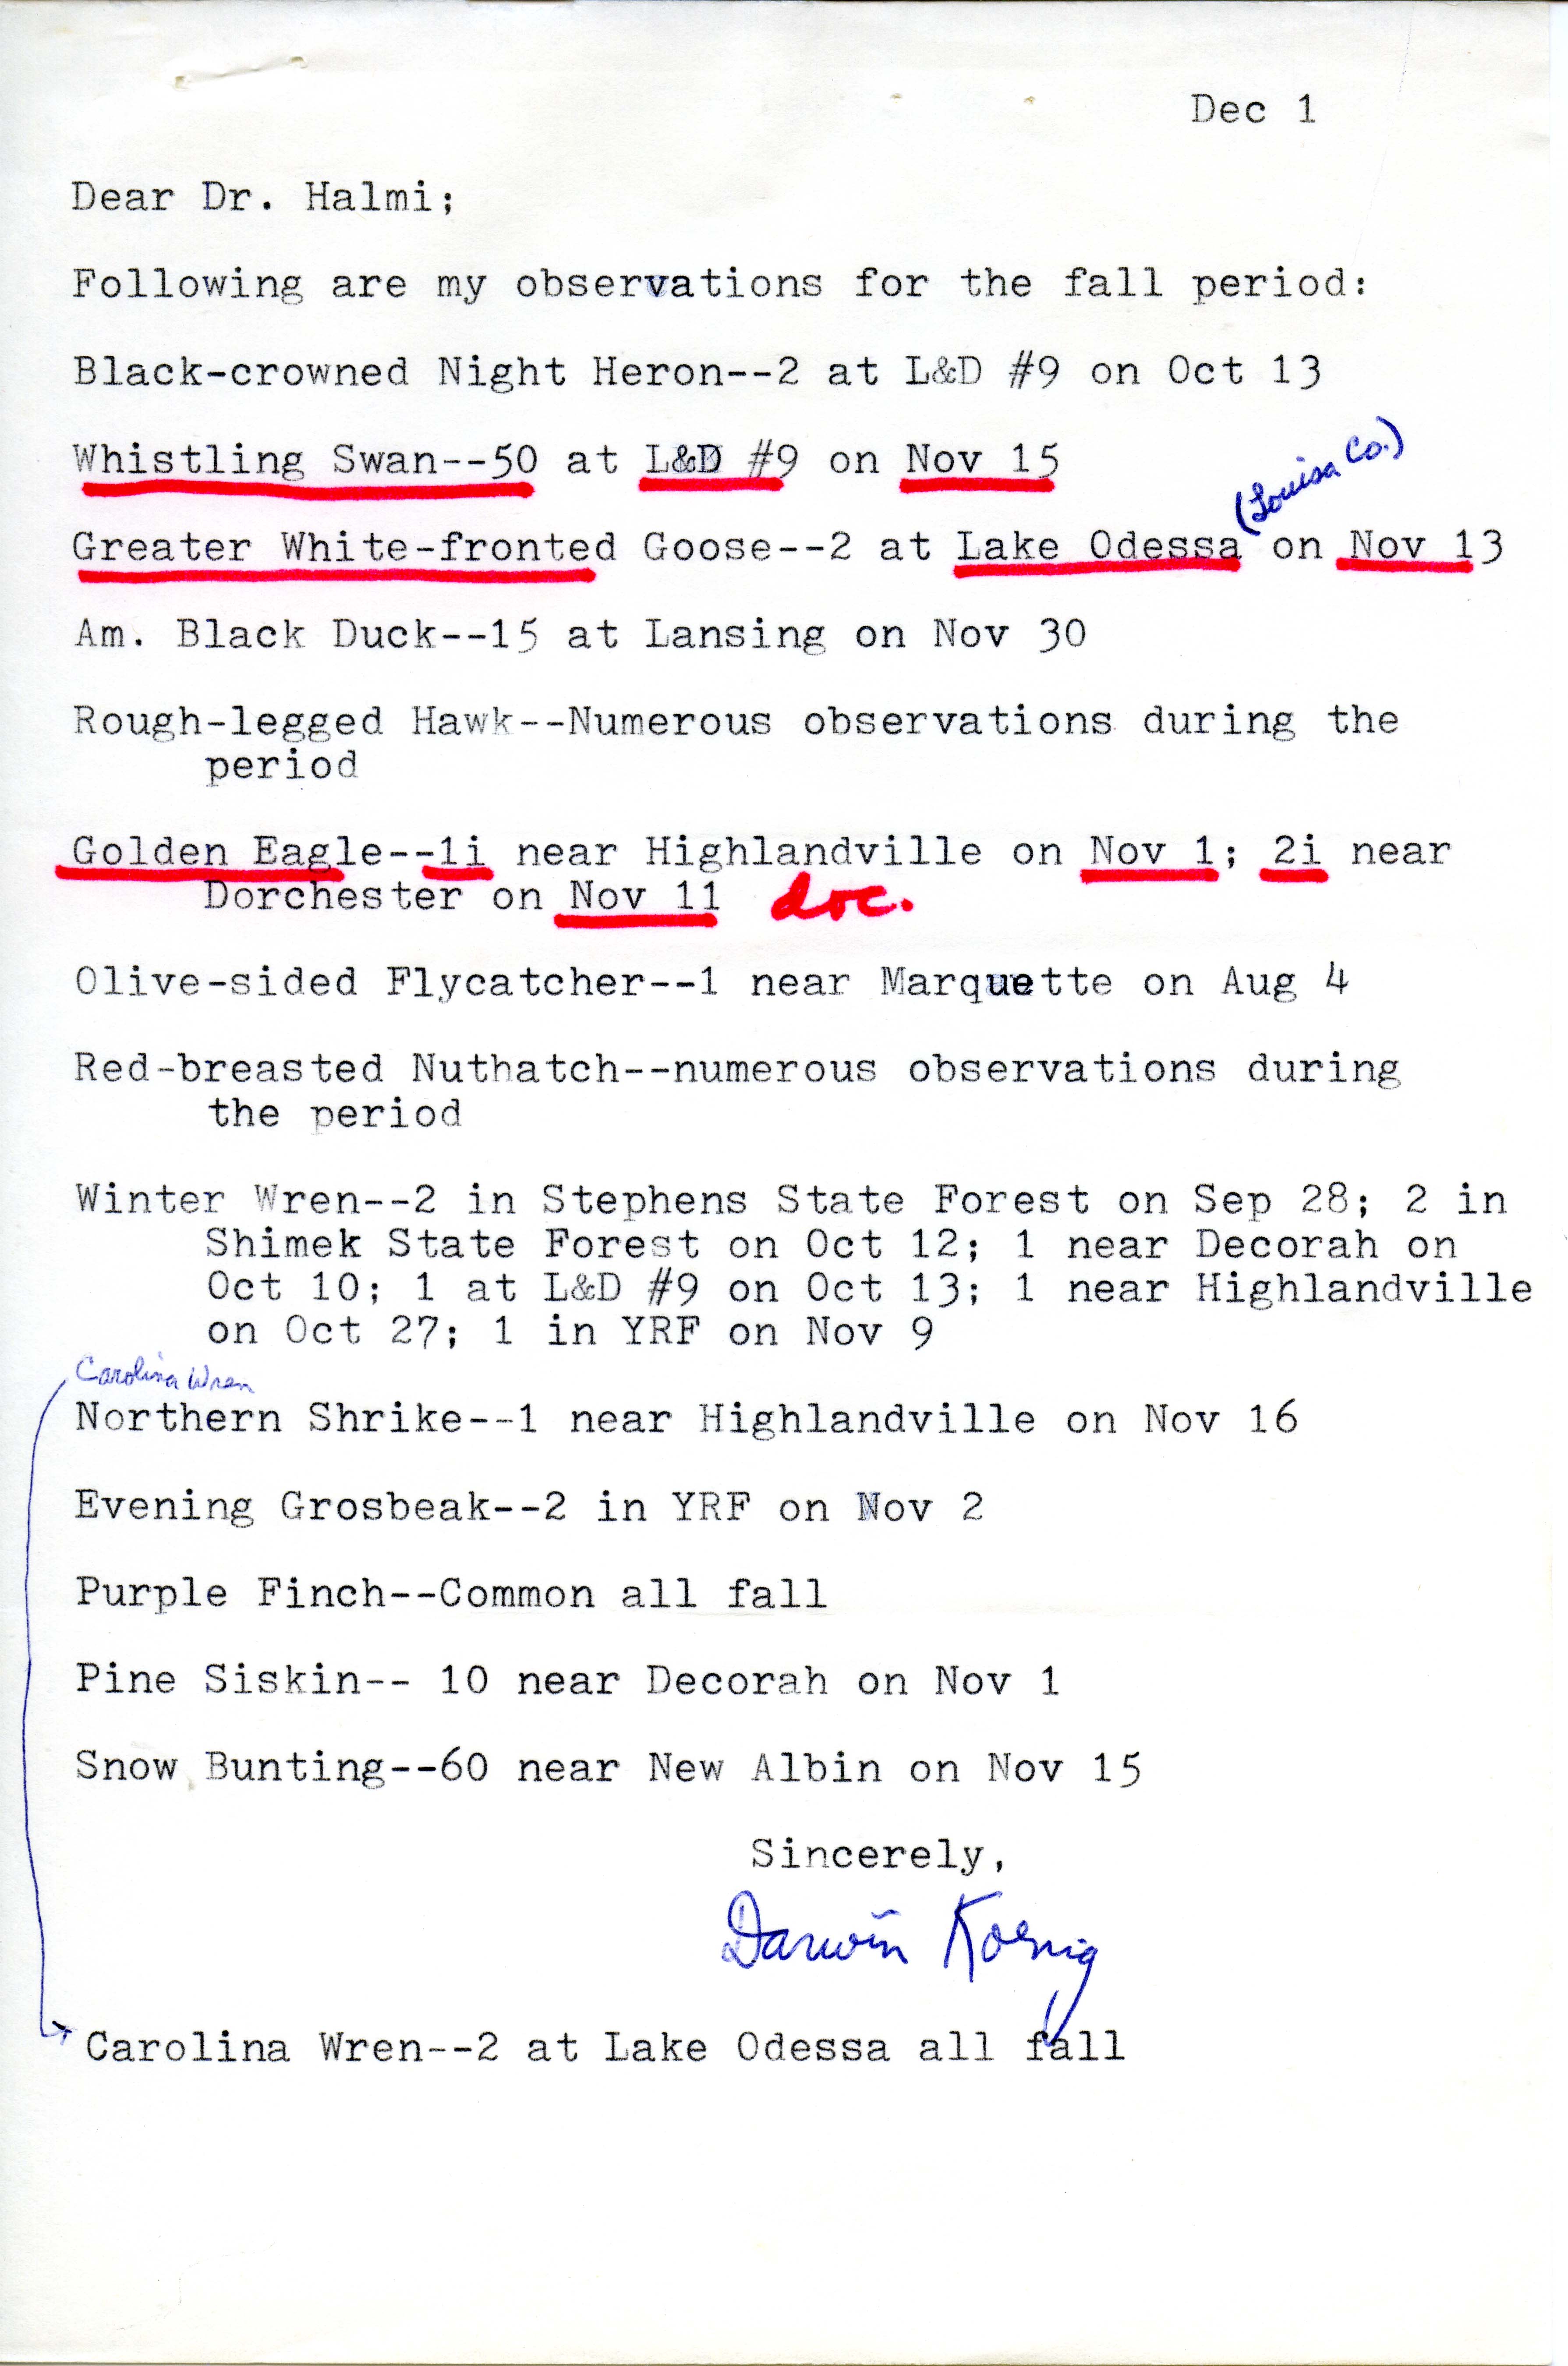 Darwin Koenig letter to Nicholas S. Halmi regarding bird sightings, December 1, 1978